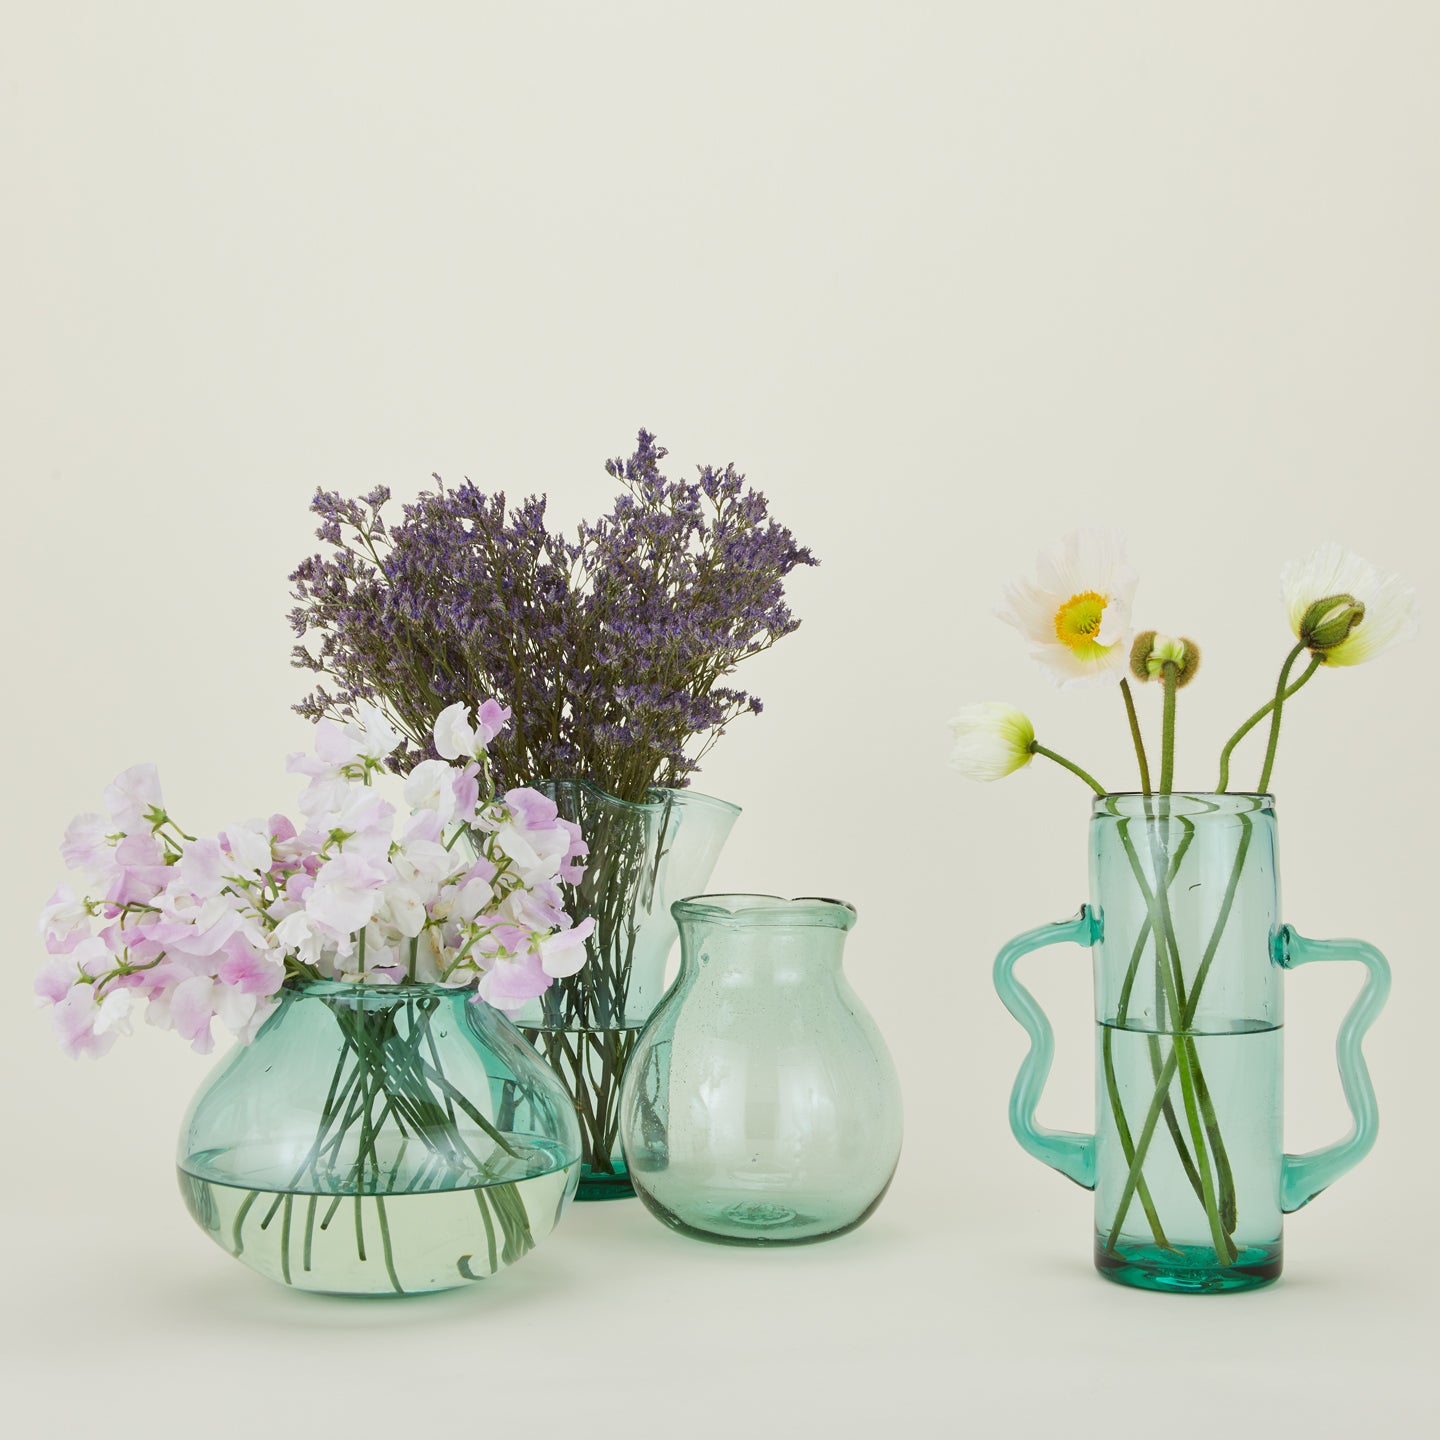 Llorente Recycled Glass Vase